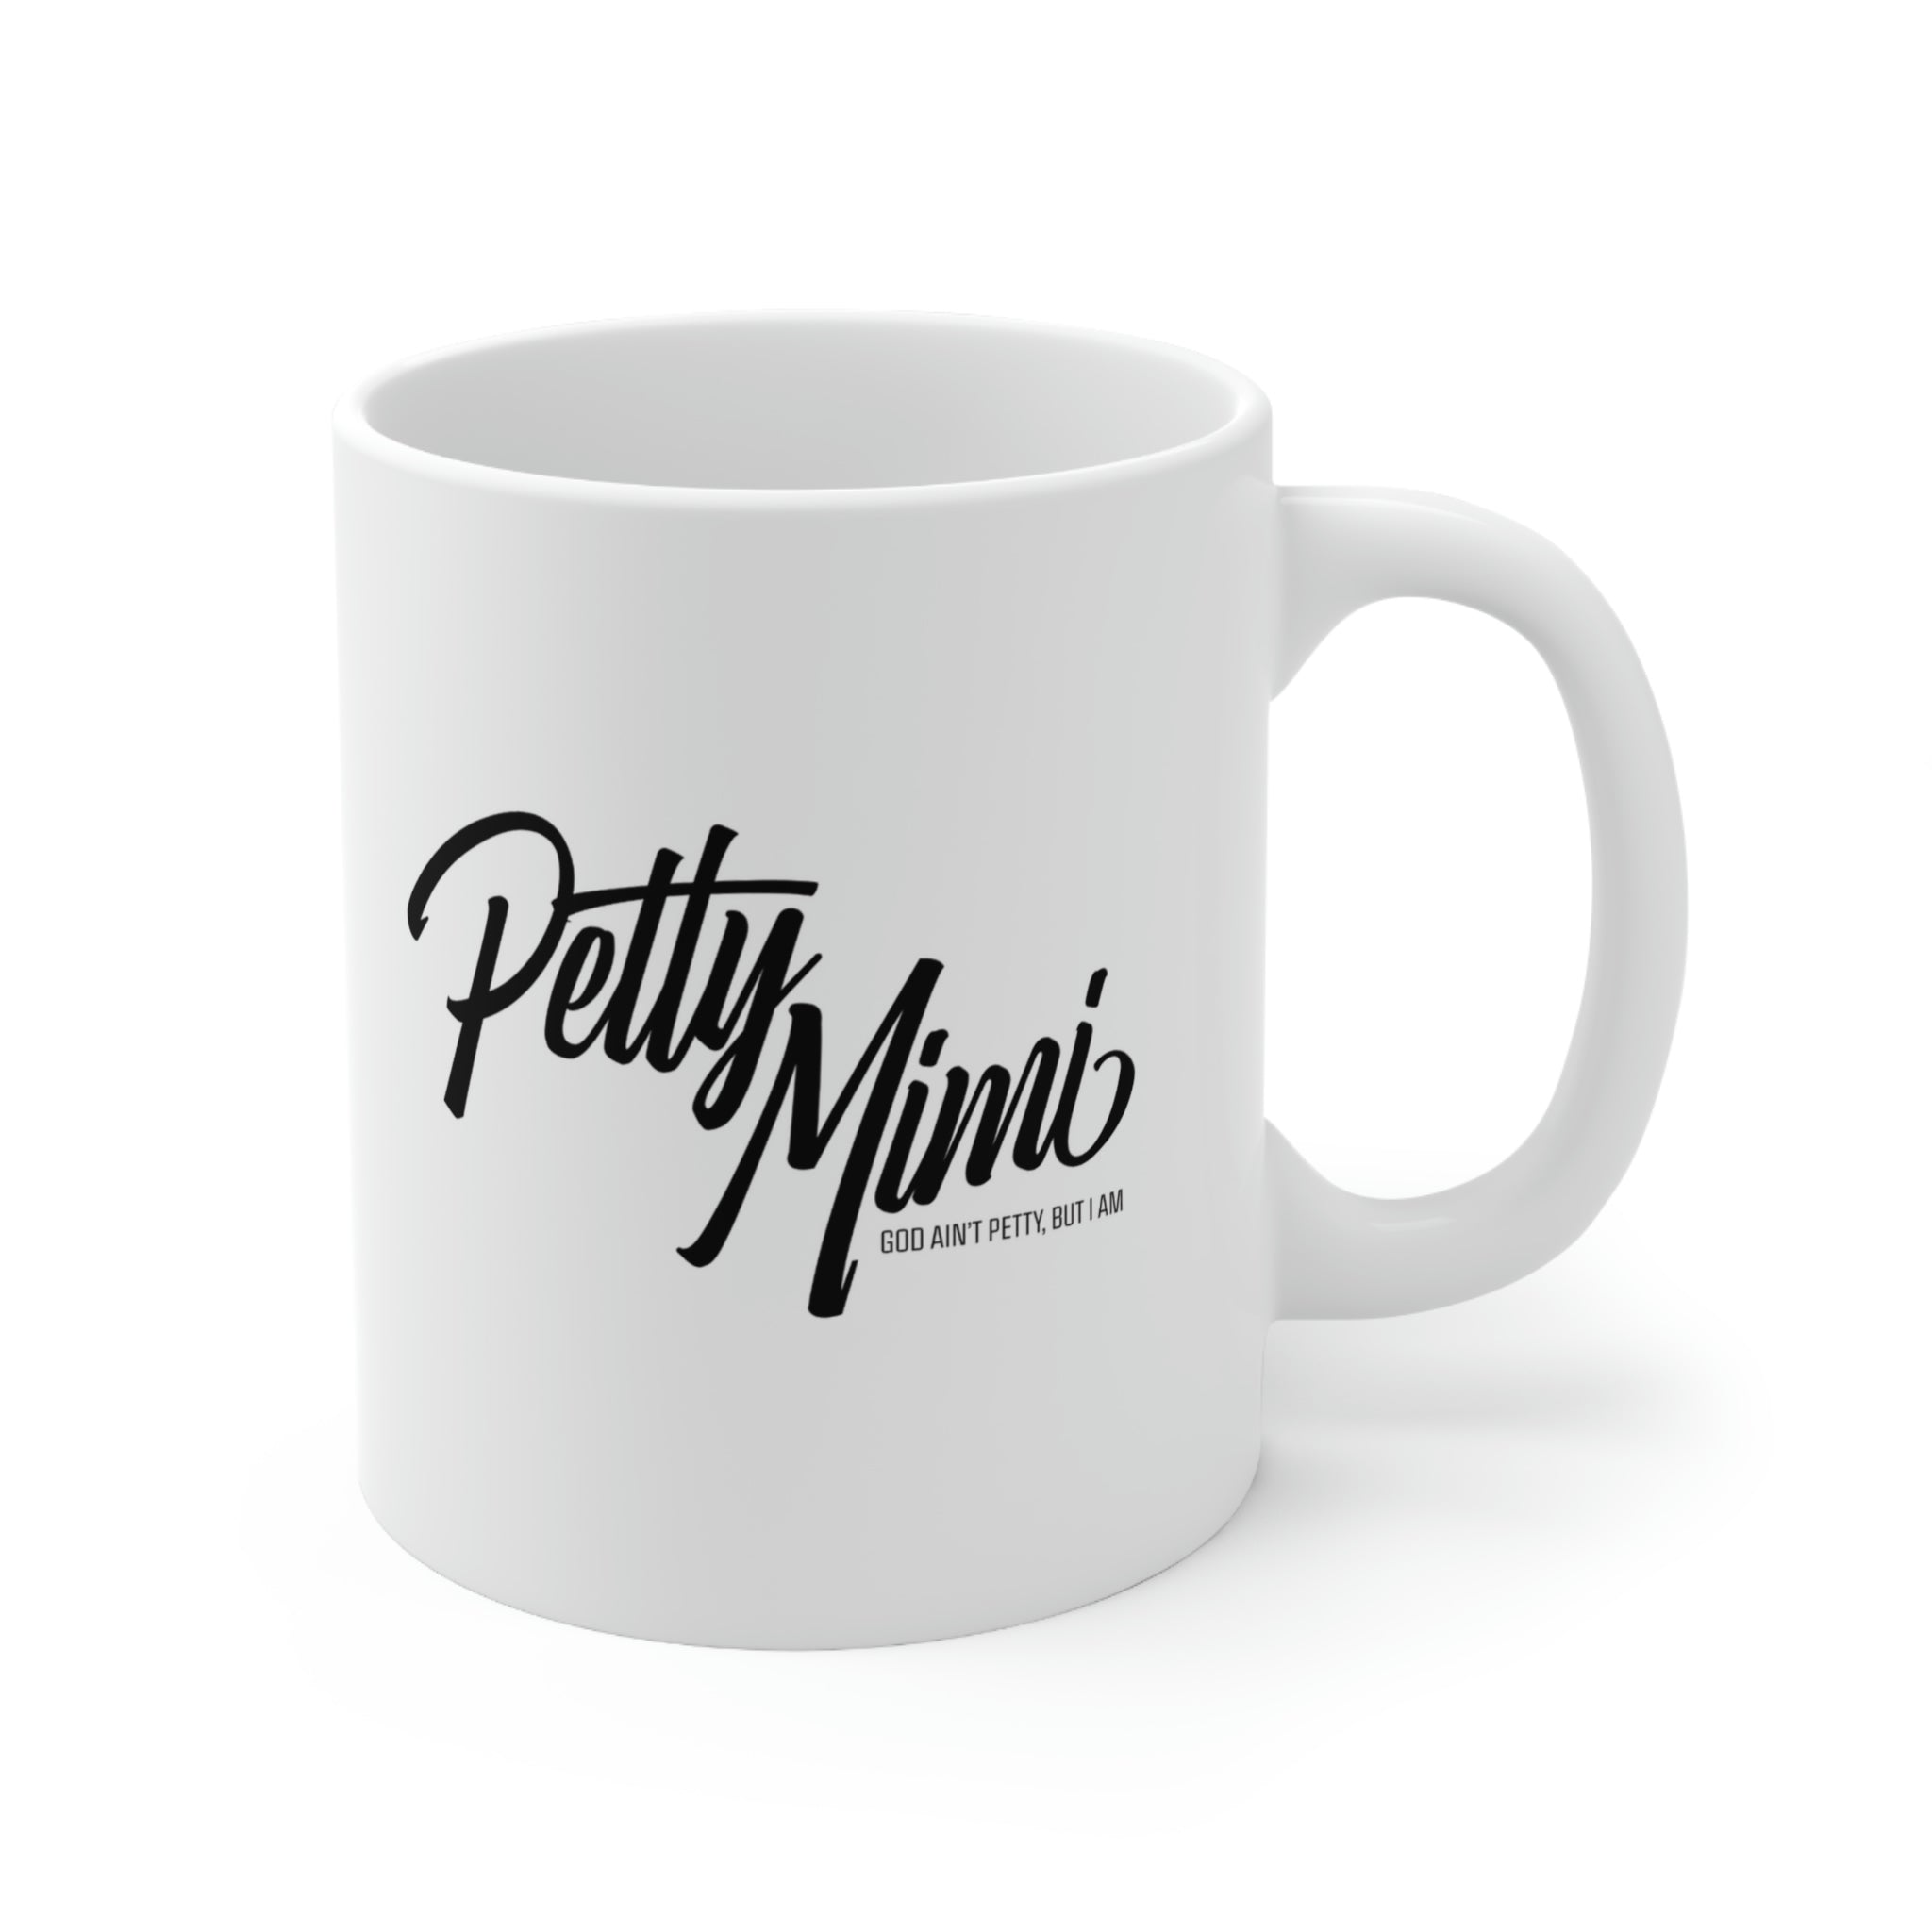 Petty Mimi Mug 11oz (White/Black)-Mug-The Original God Ain't Petty But I Am